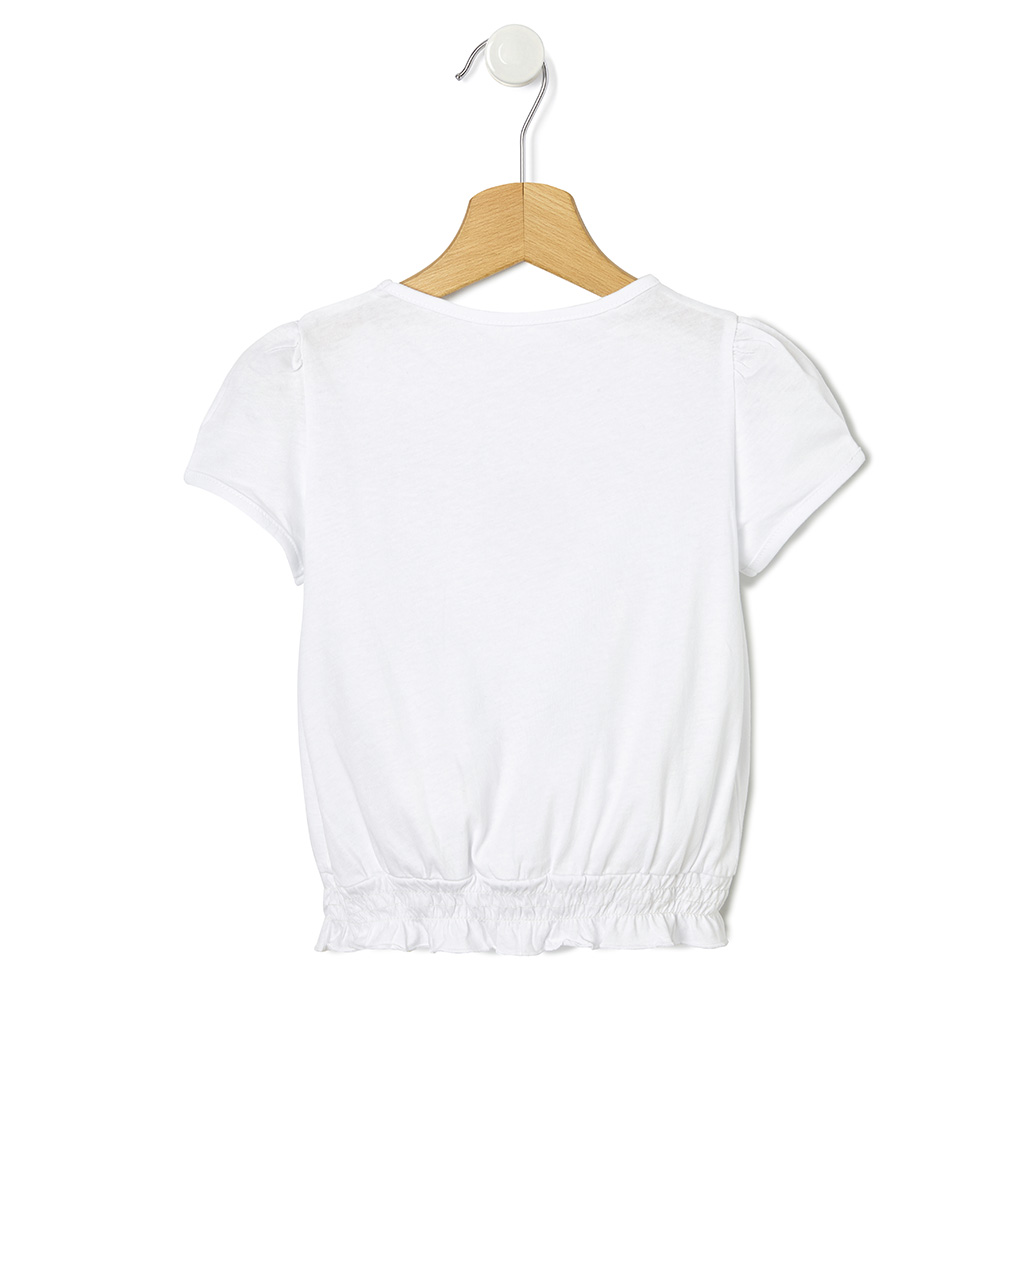 T-shirt jersey λευκό με στάμπα και σούρα για κορίτσι - Prénatal